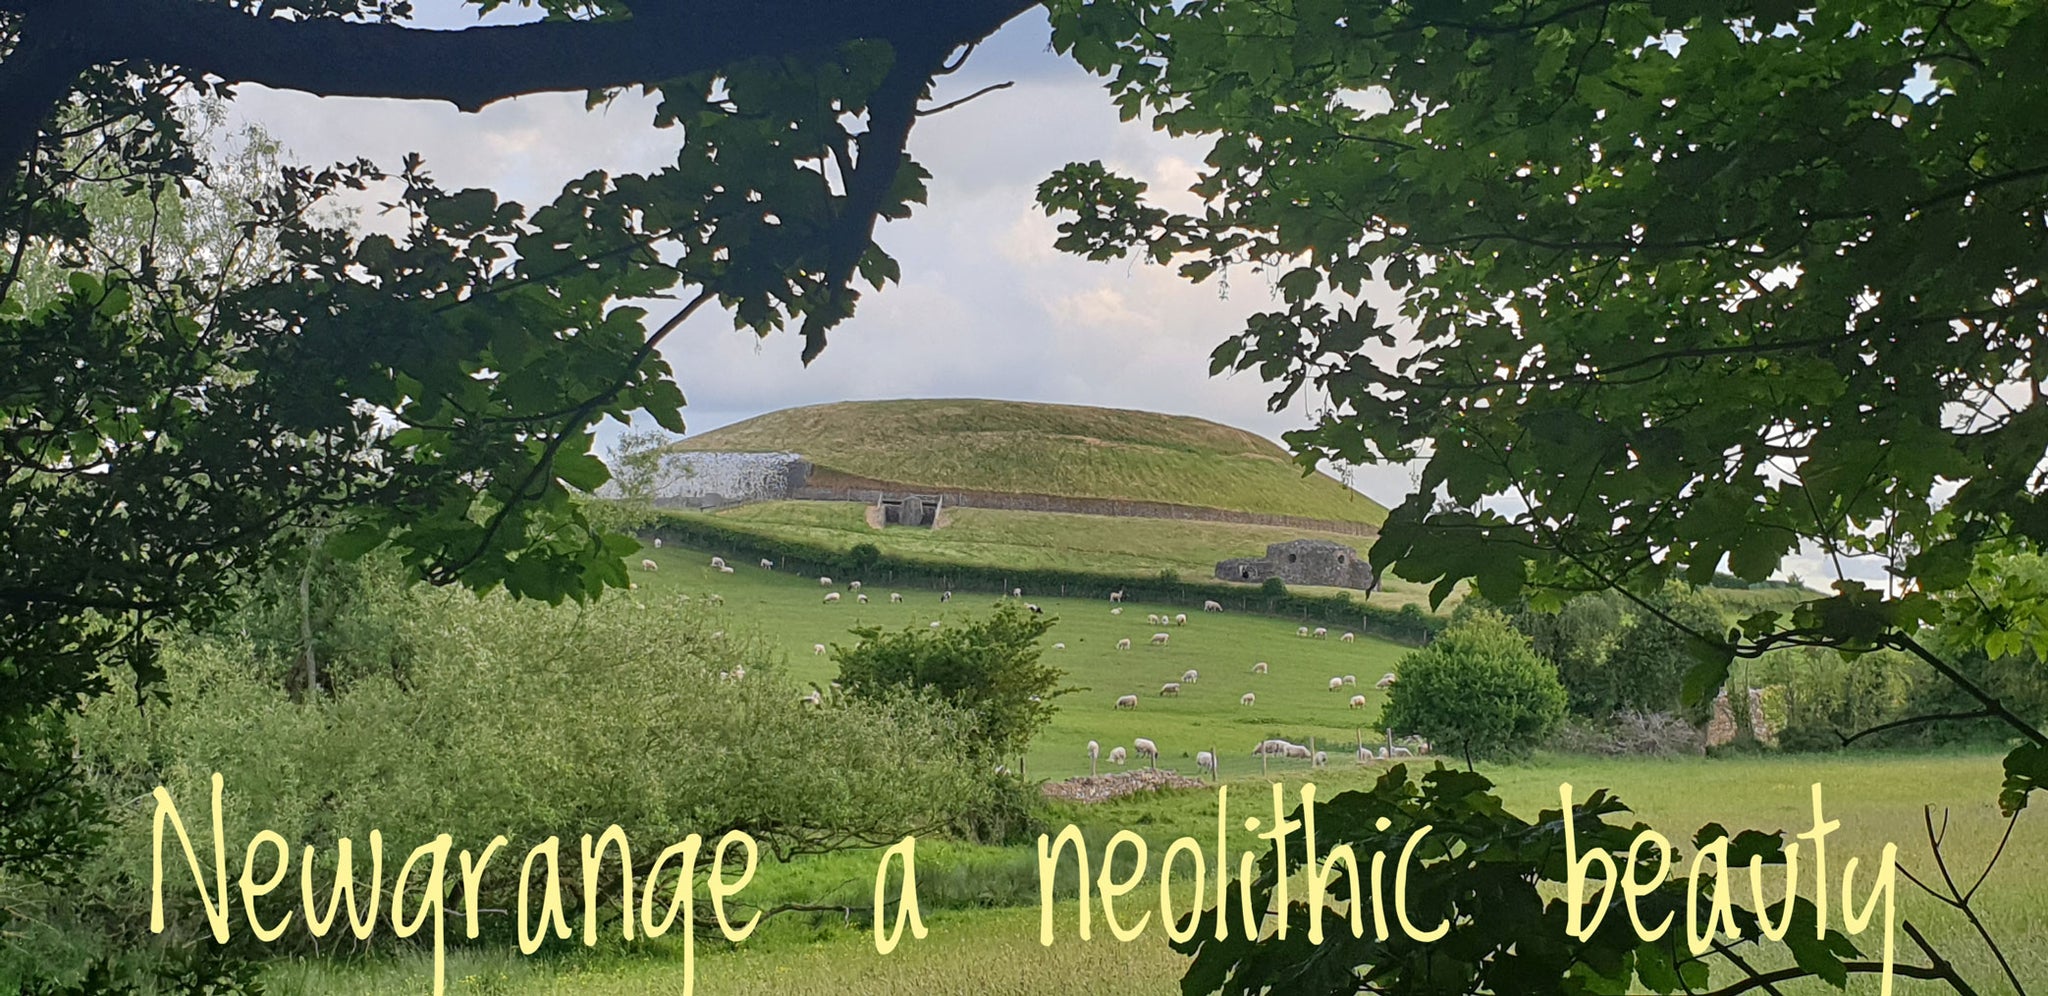 Newgrange; a neolithic beauty